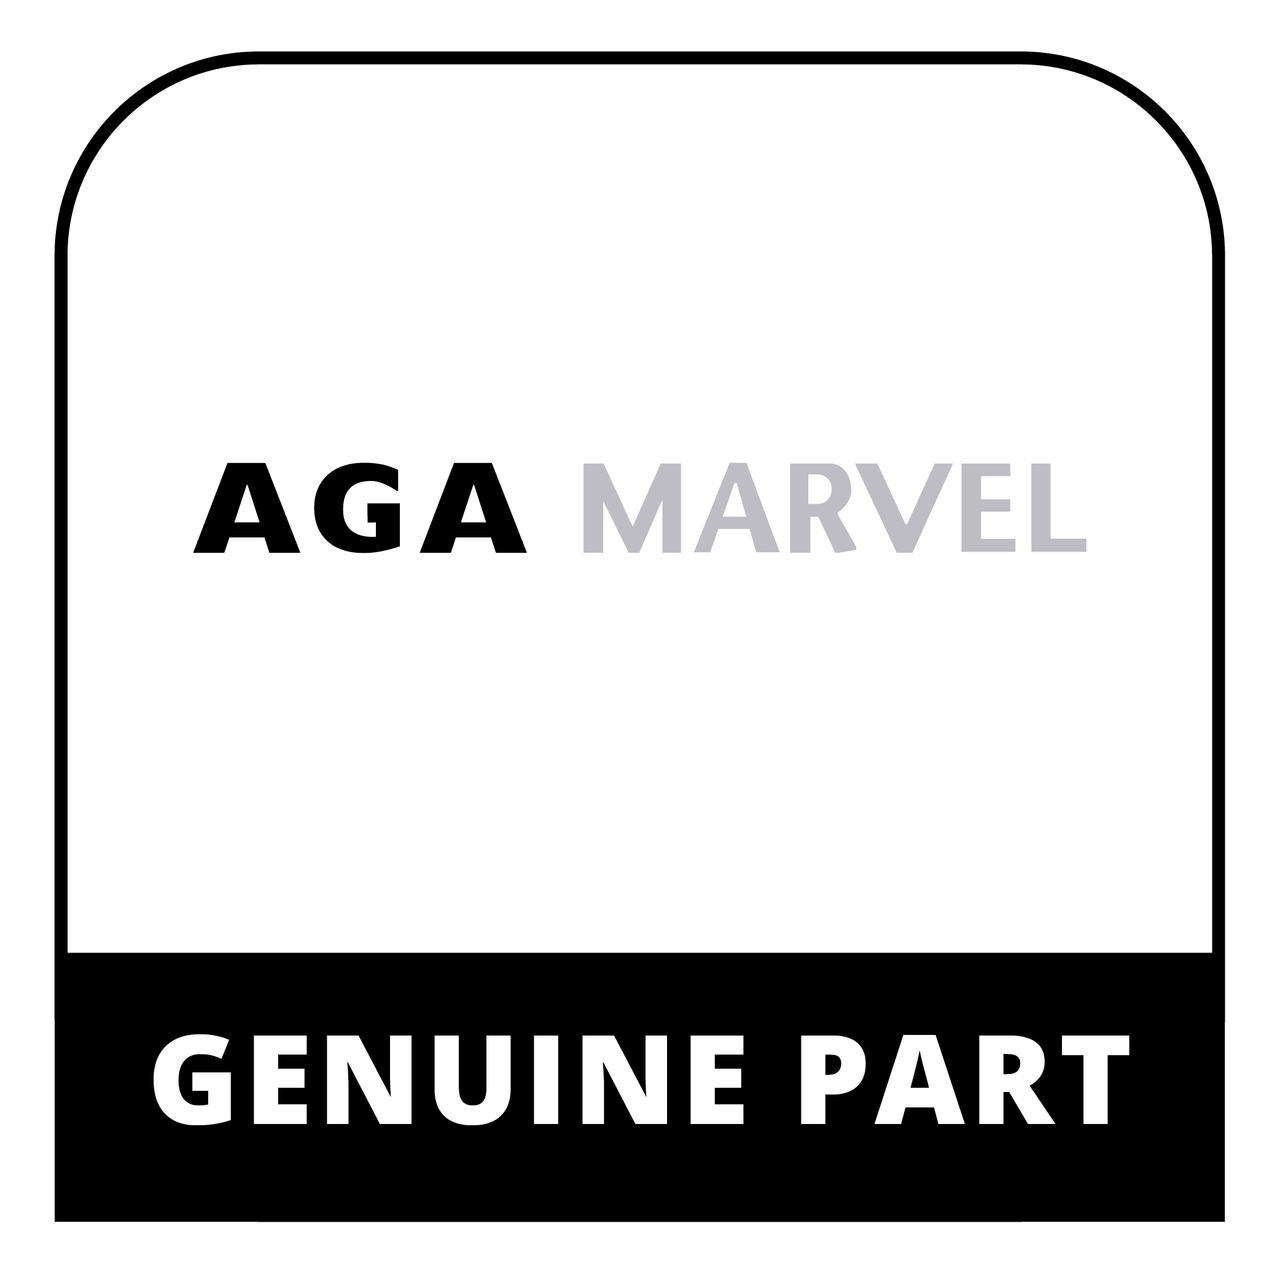 AGA Marvel RO4M998562 - Relay Finder (Emx) R733/2 - Genuine AGA Marvel Part